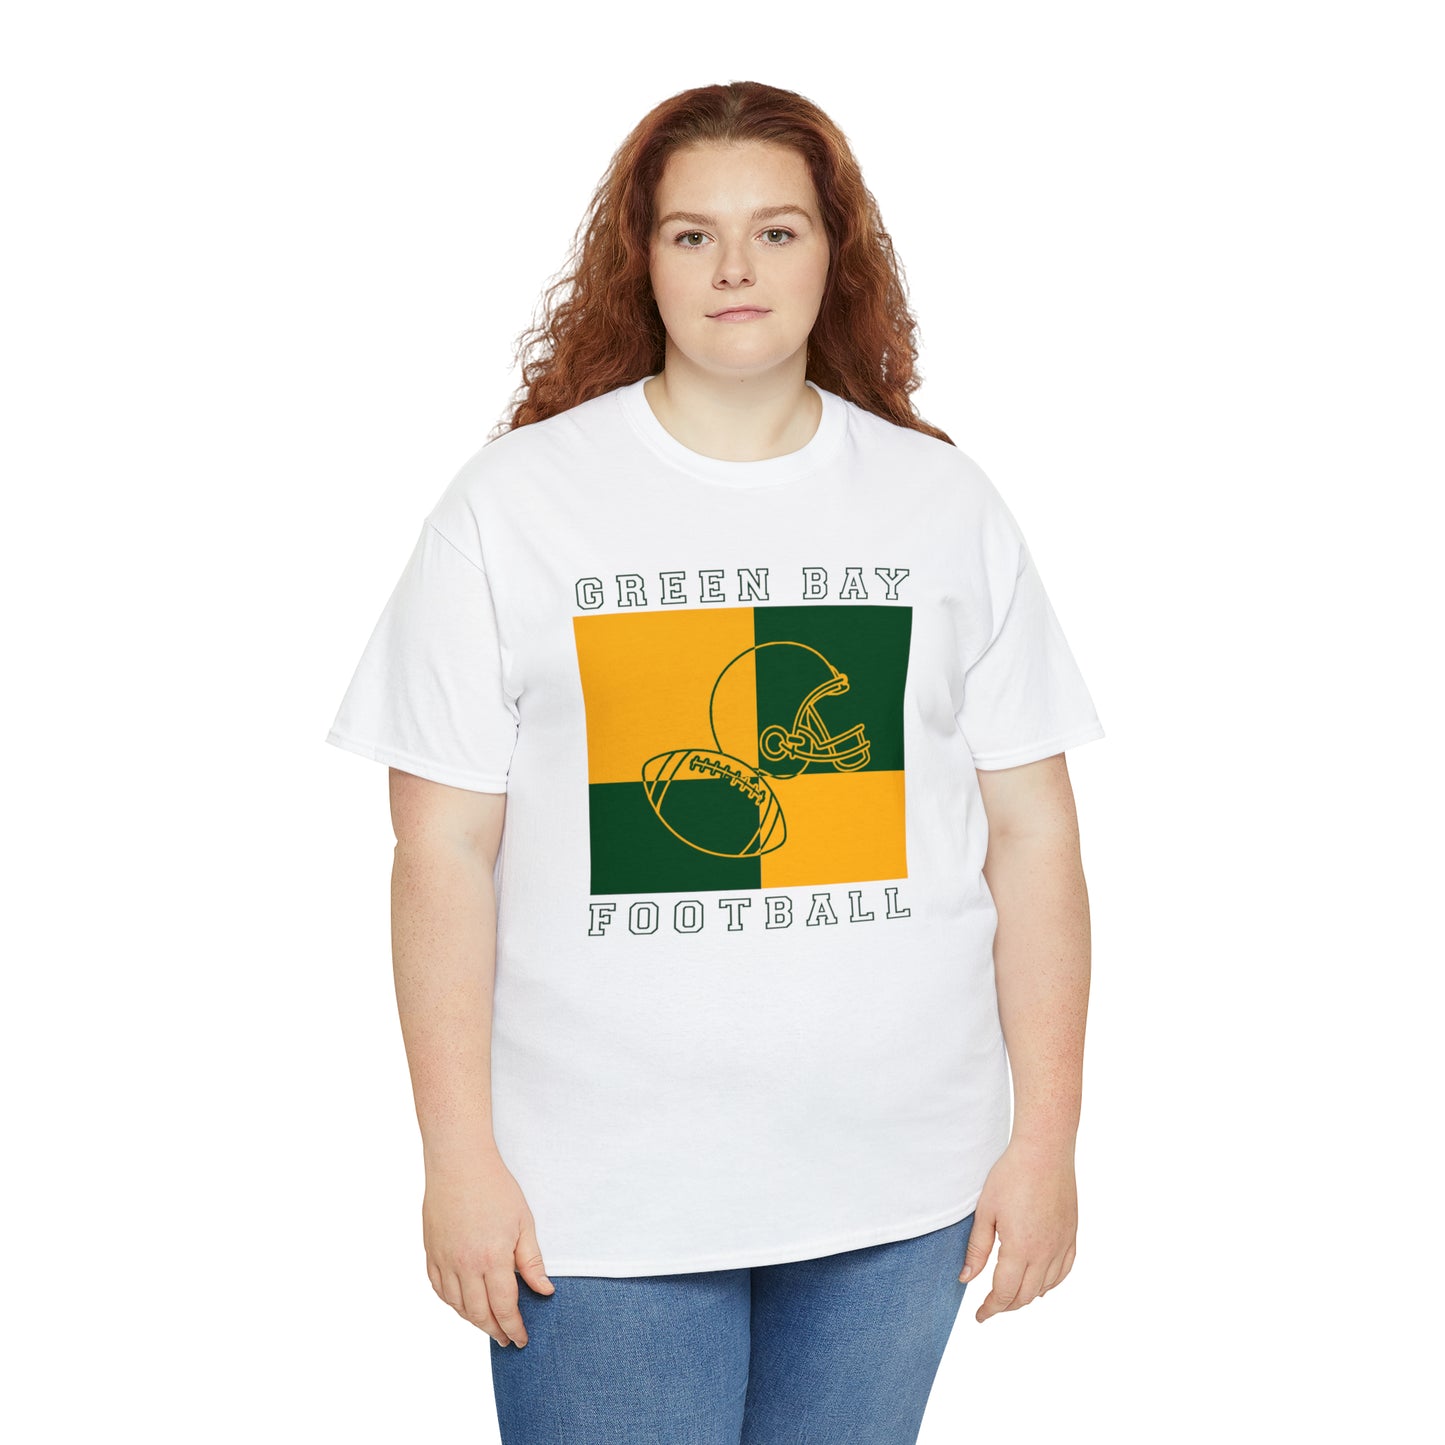 Green Bay Packers Football Tshirt